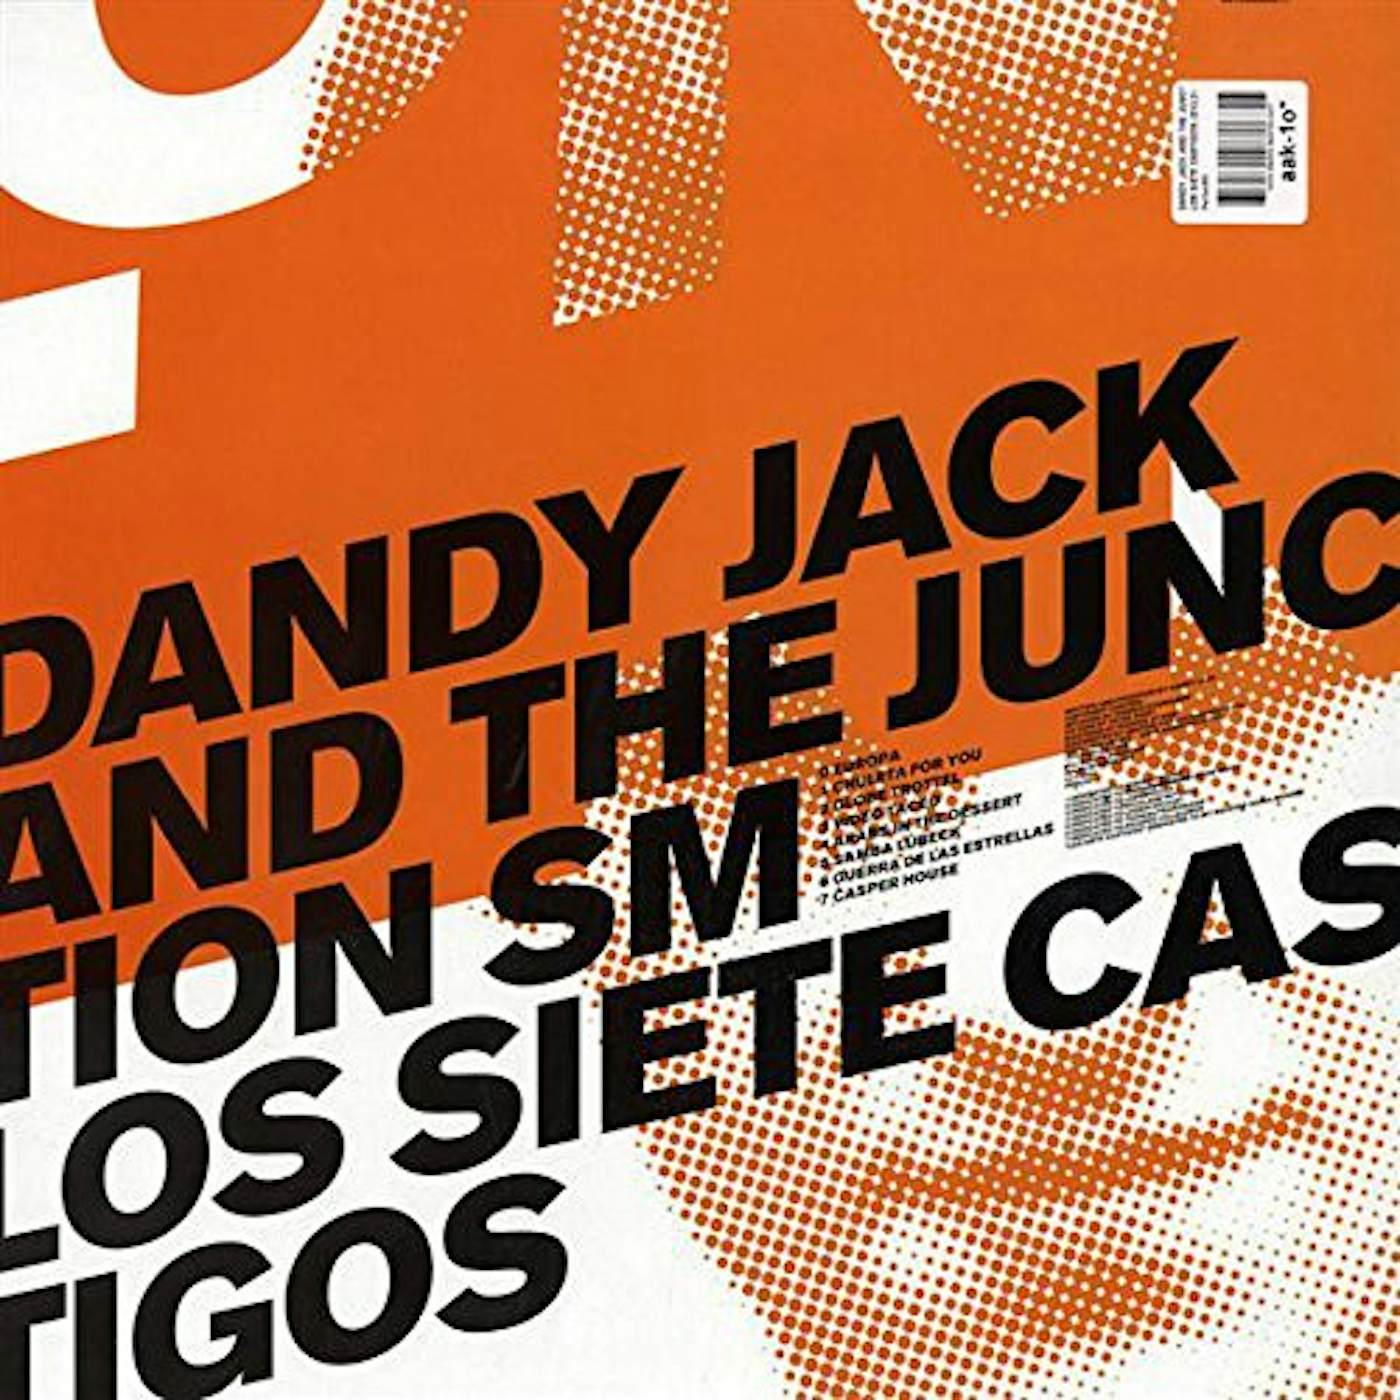 Dandy / Junction Sm Jack SIETE CASTIGOS Vinyl Record